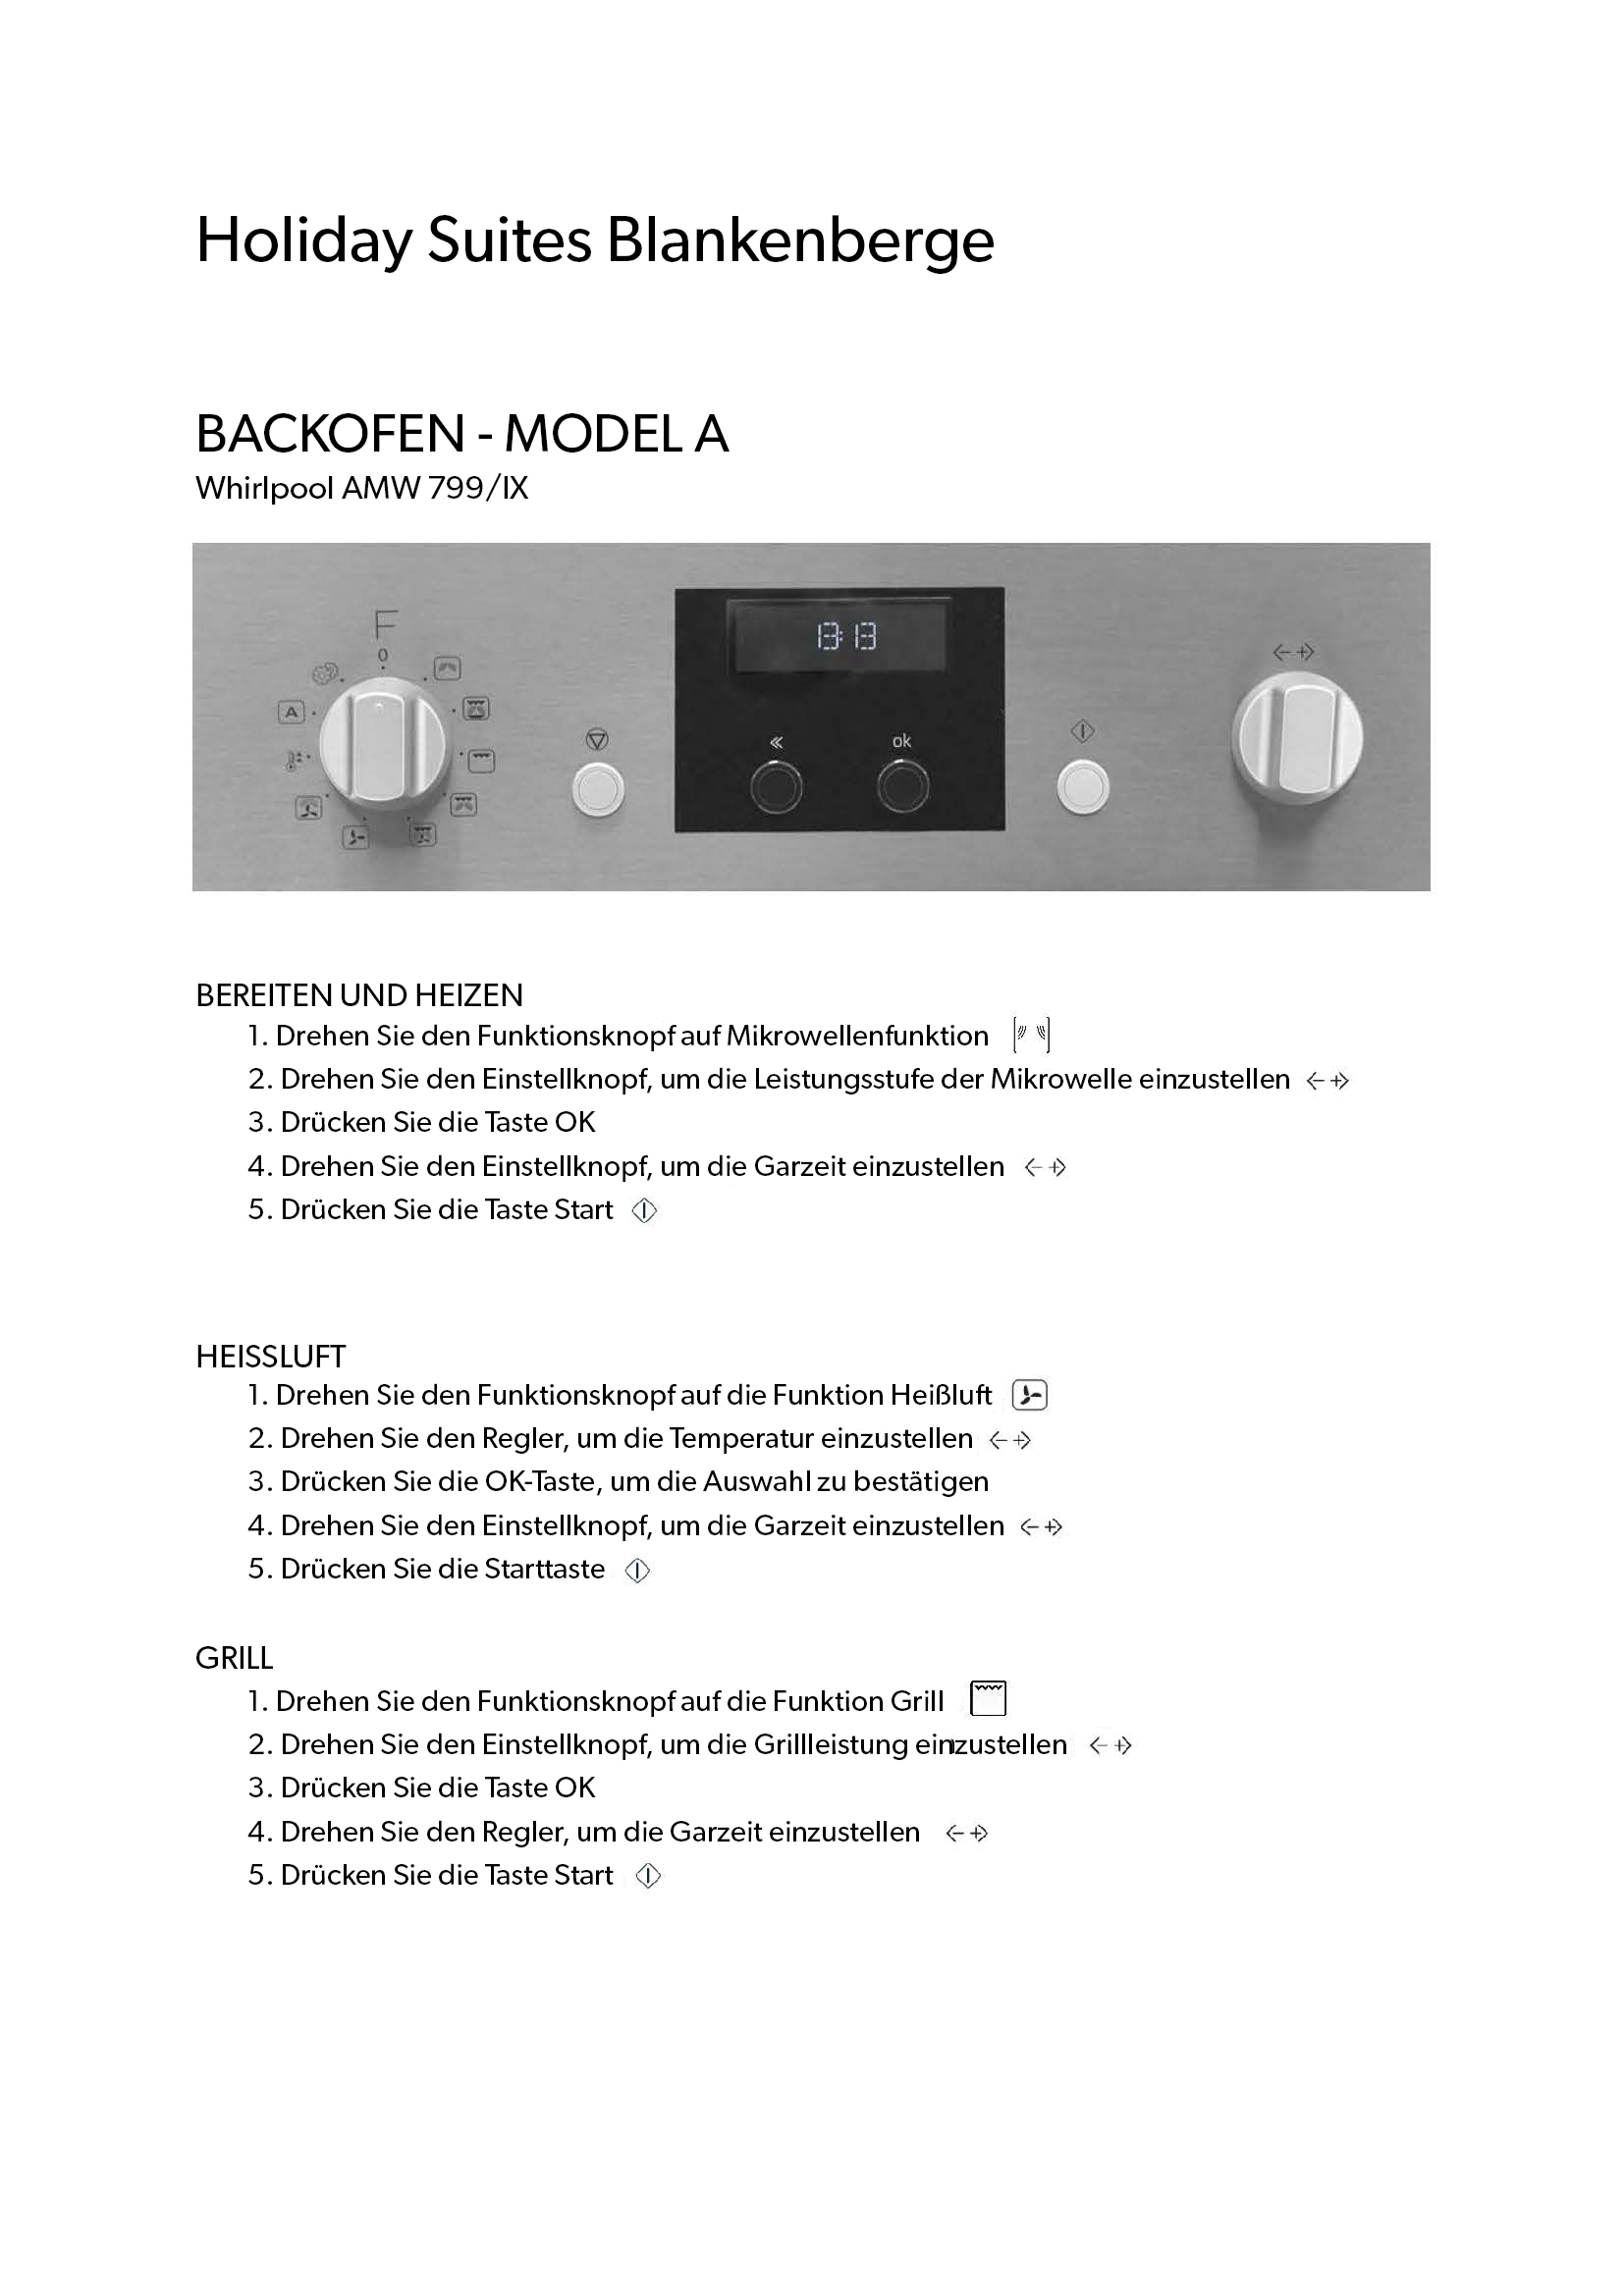 Blankenberge_-_Oven_-_Model_A.jpg